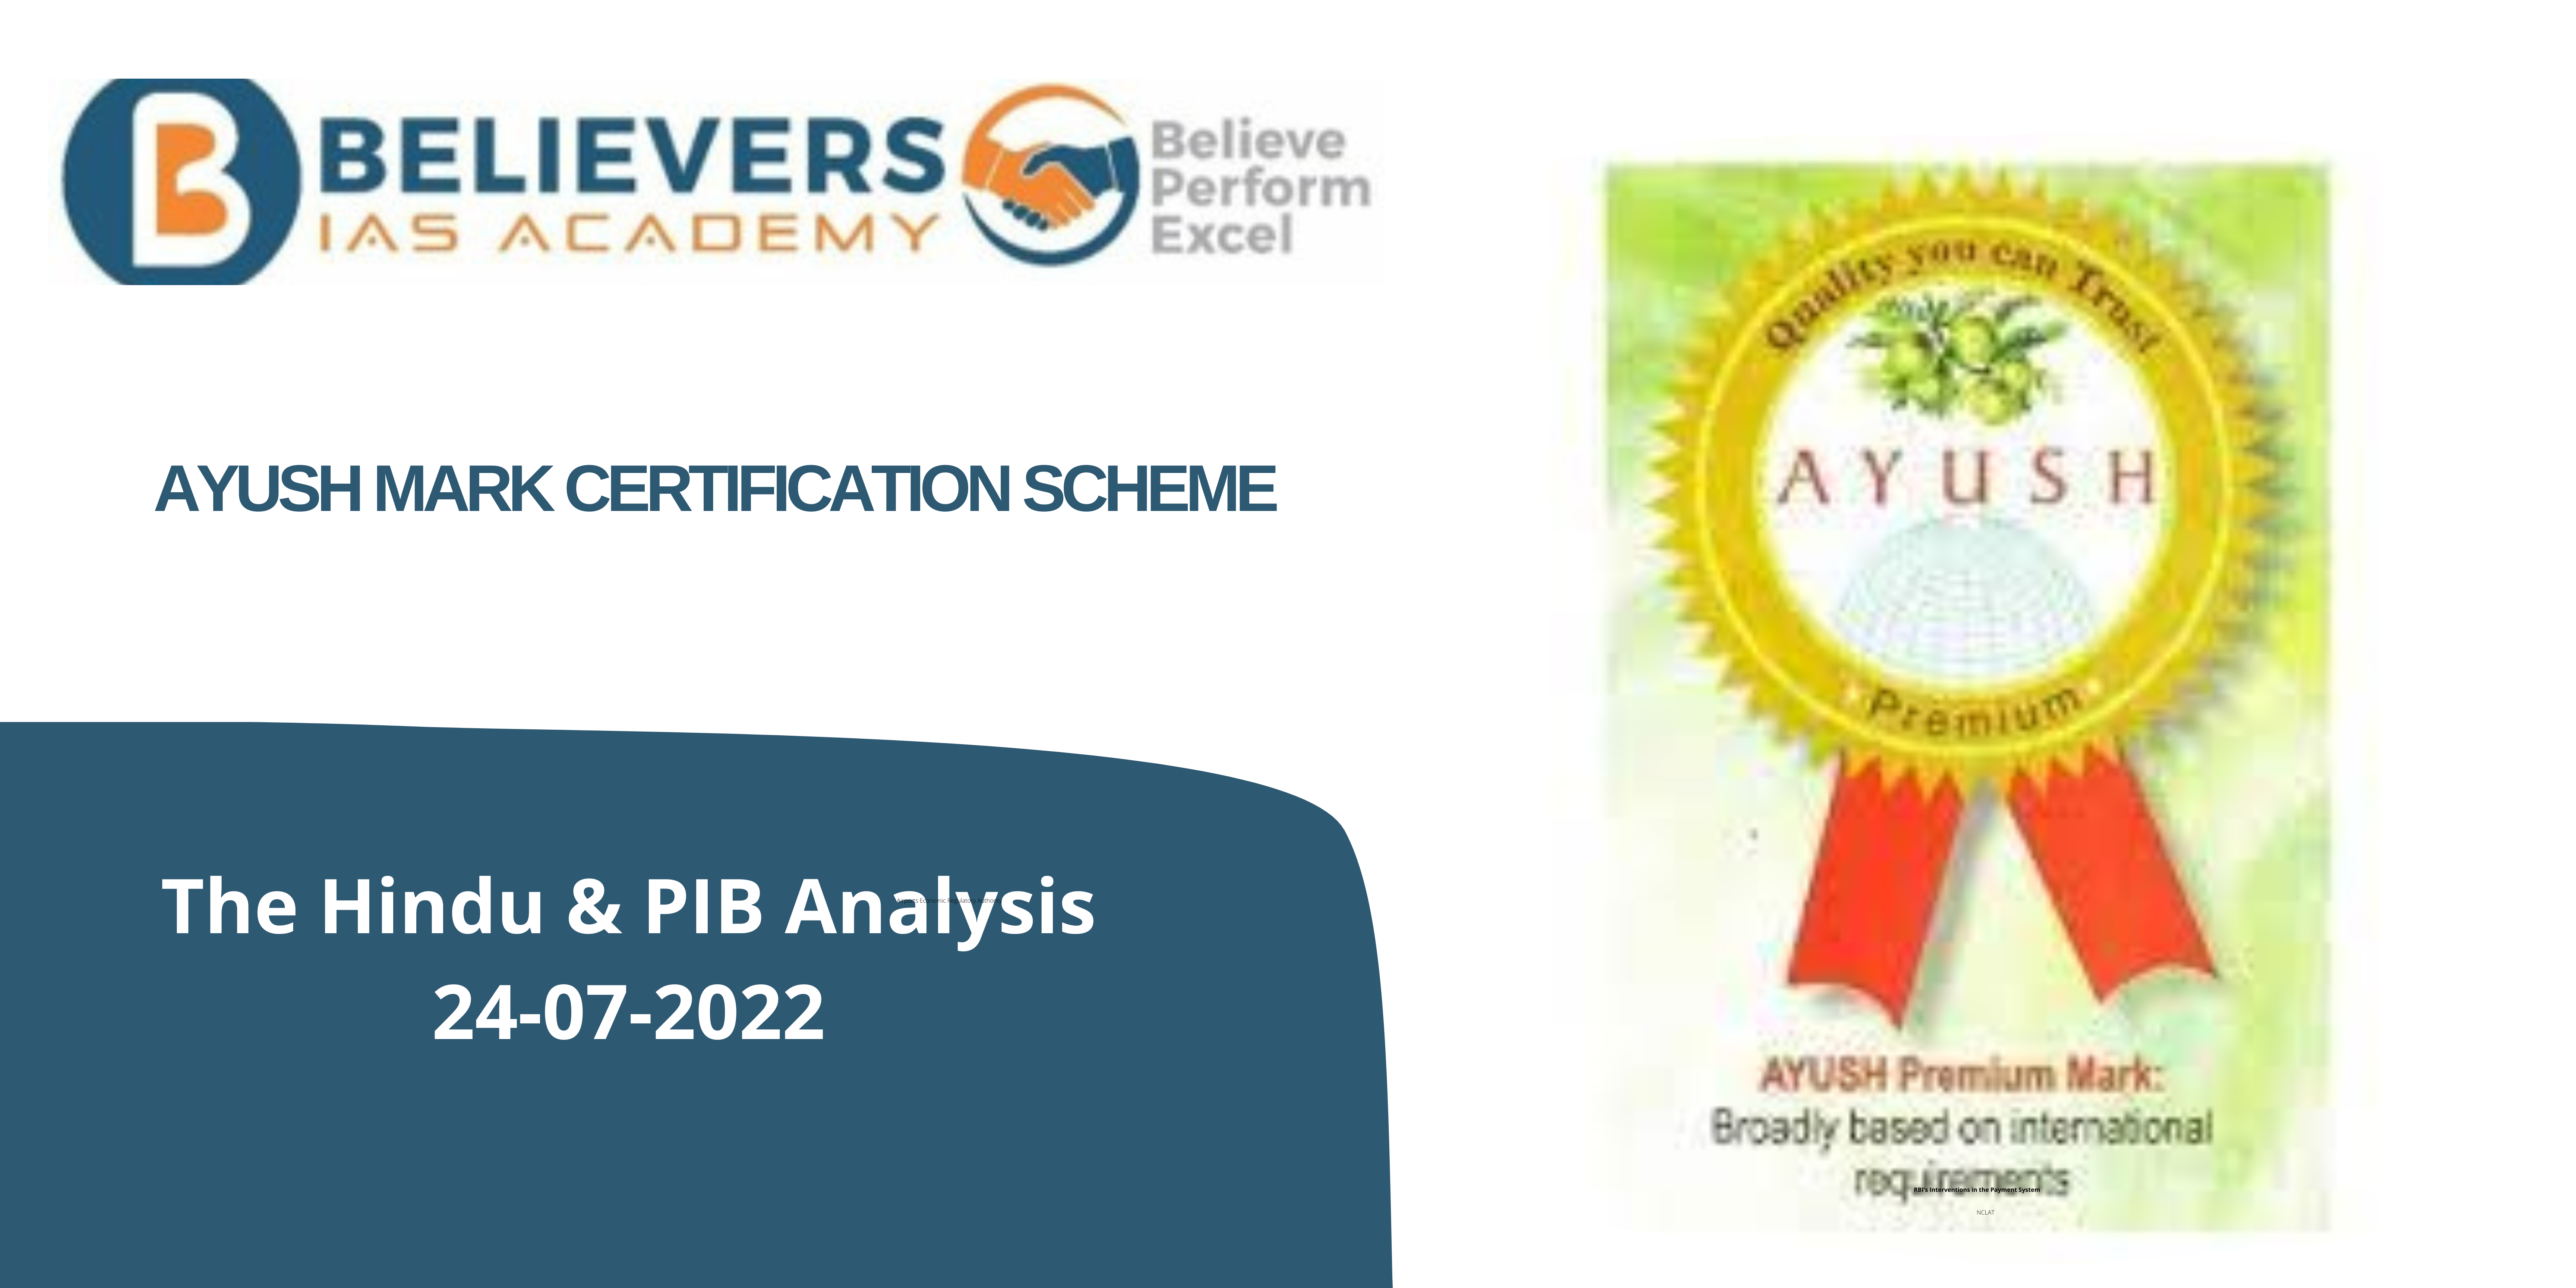 UPSC Current affairs - Ayush Mark Certification Scheme